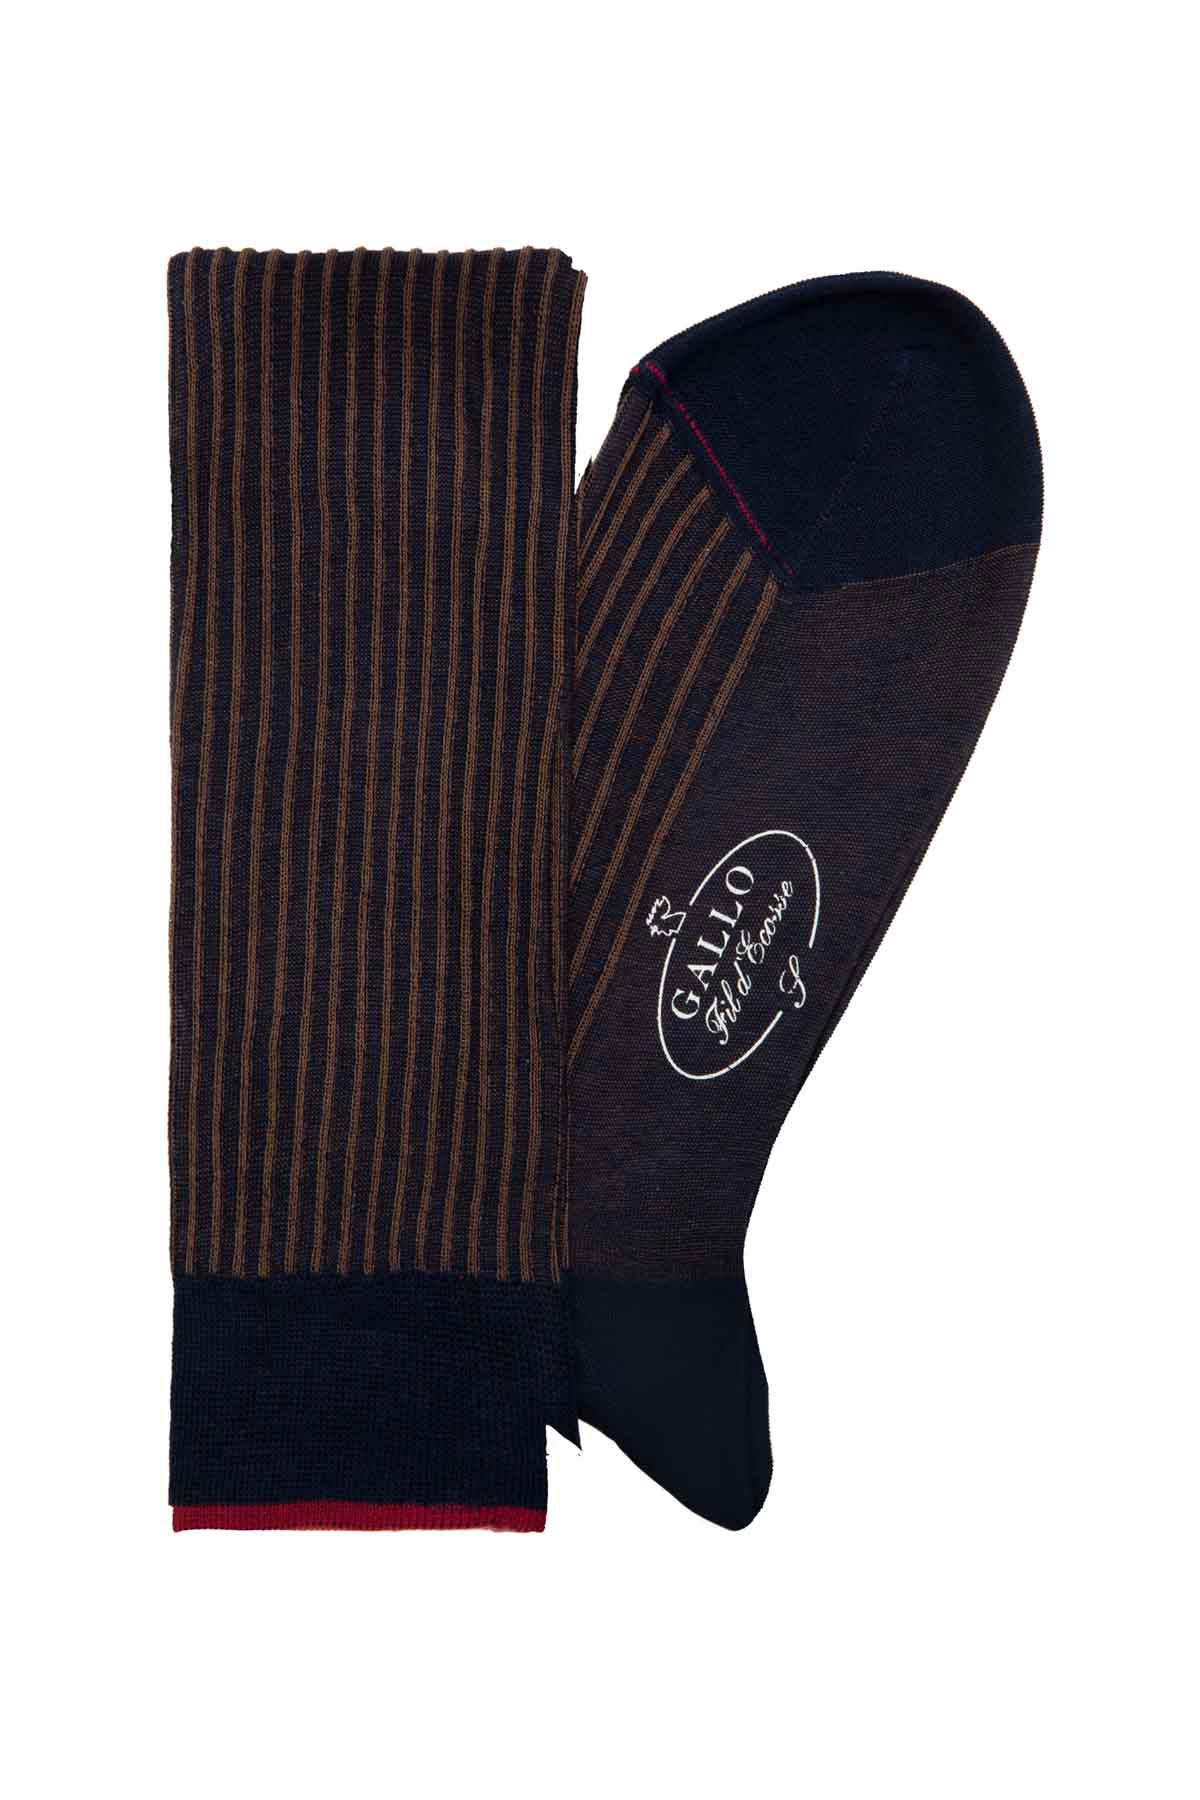 Italian Ribbed Socks - Navy & Brown